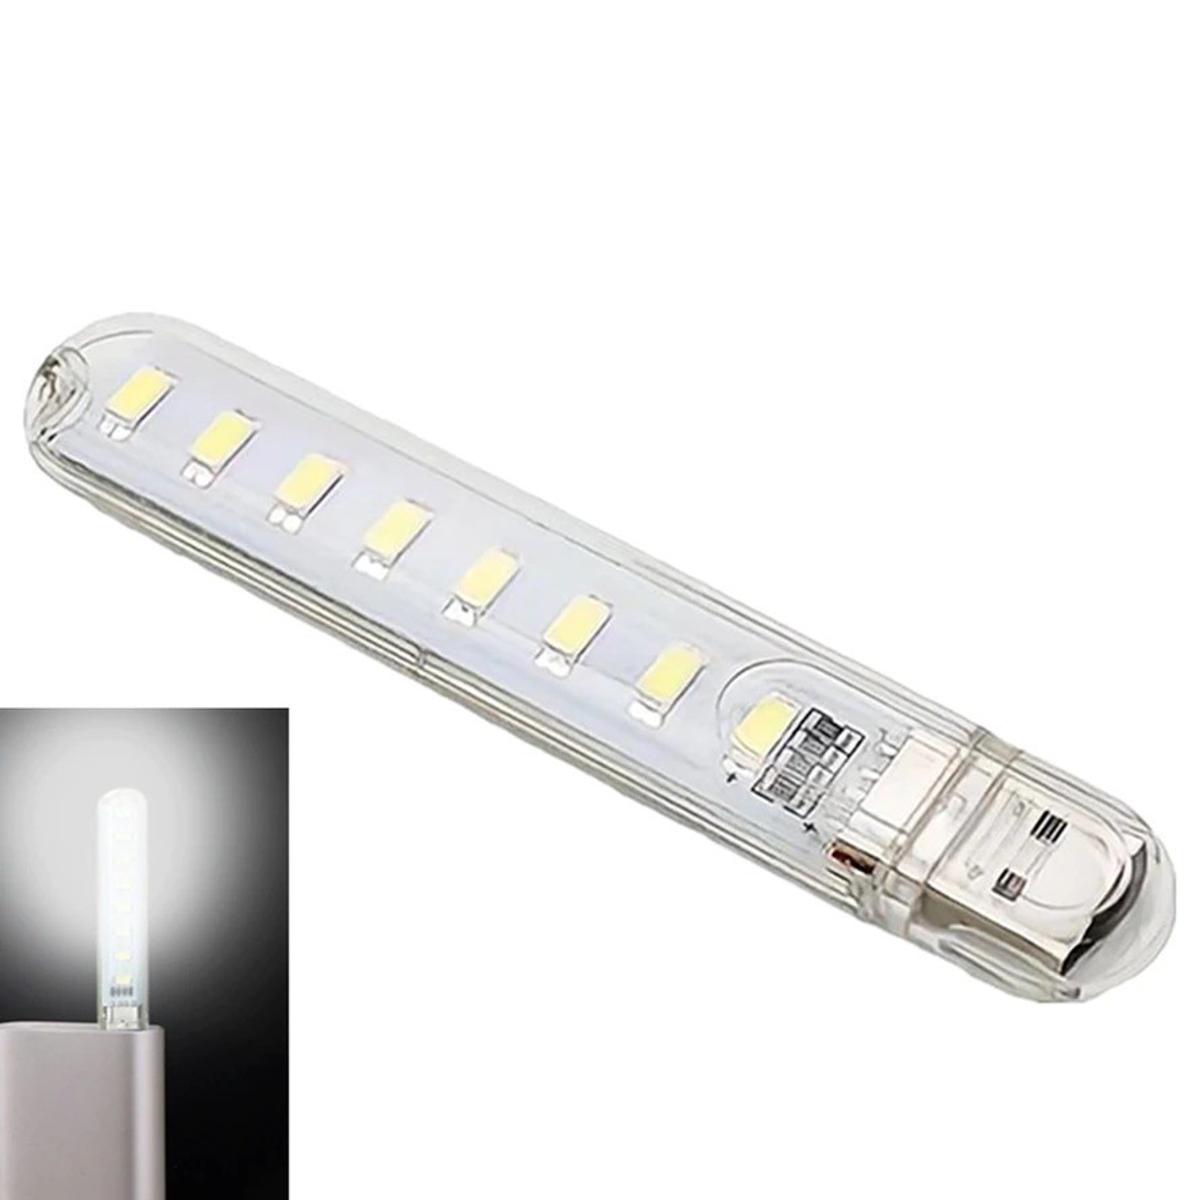 Usb Led Light 8 LEDs SMD LED Bulb 5V Power Input White USB Night light -  White